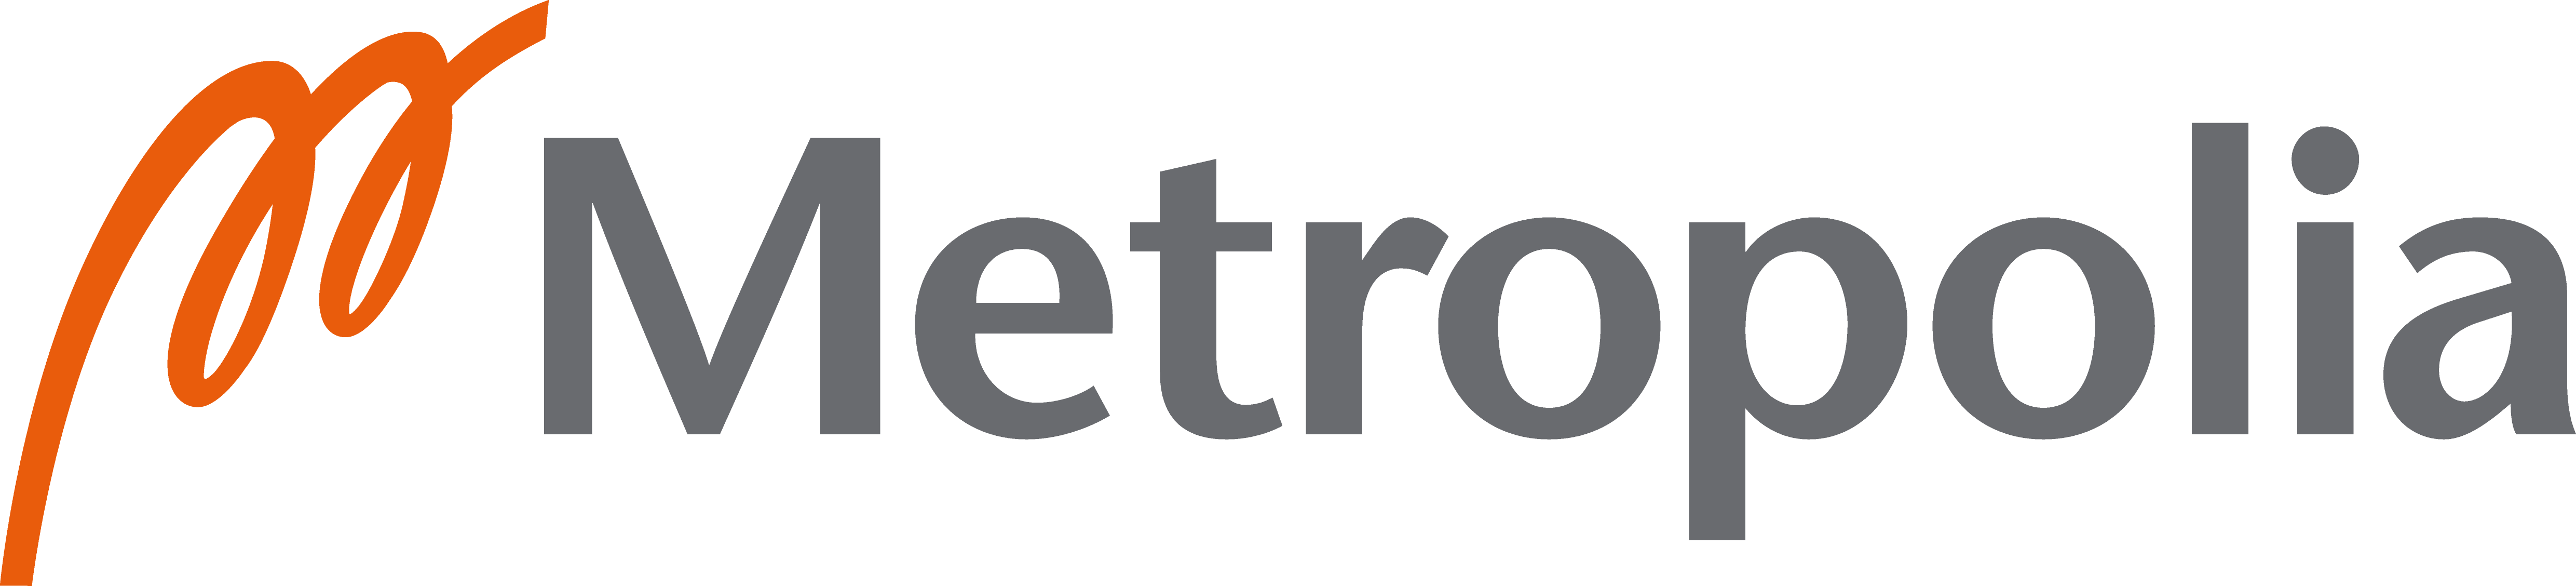 Metropolian logo